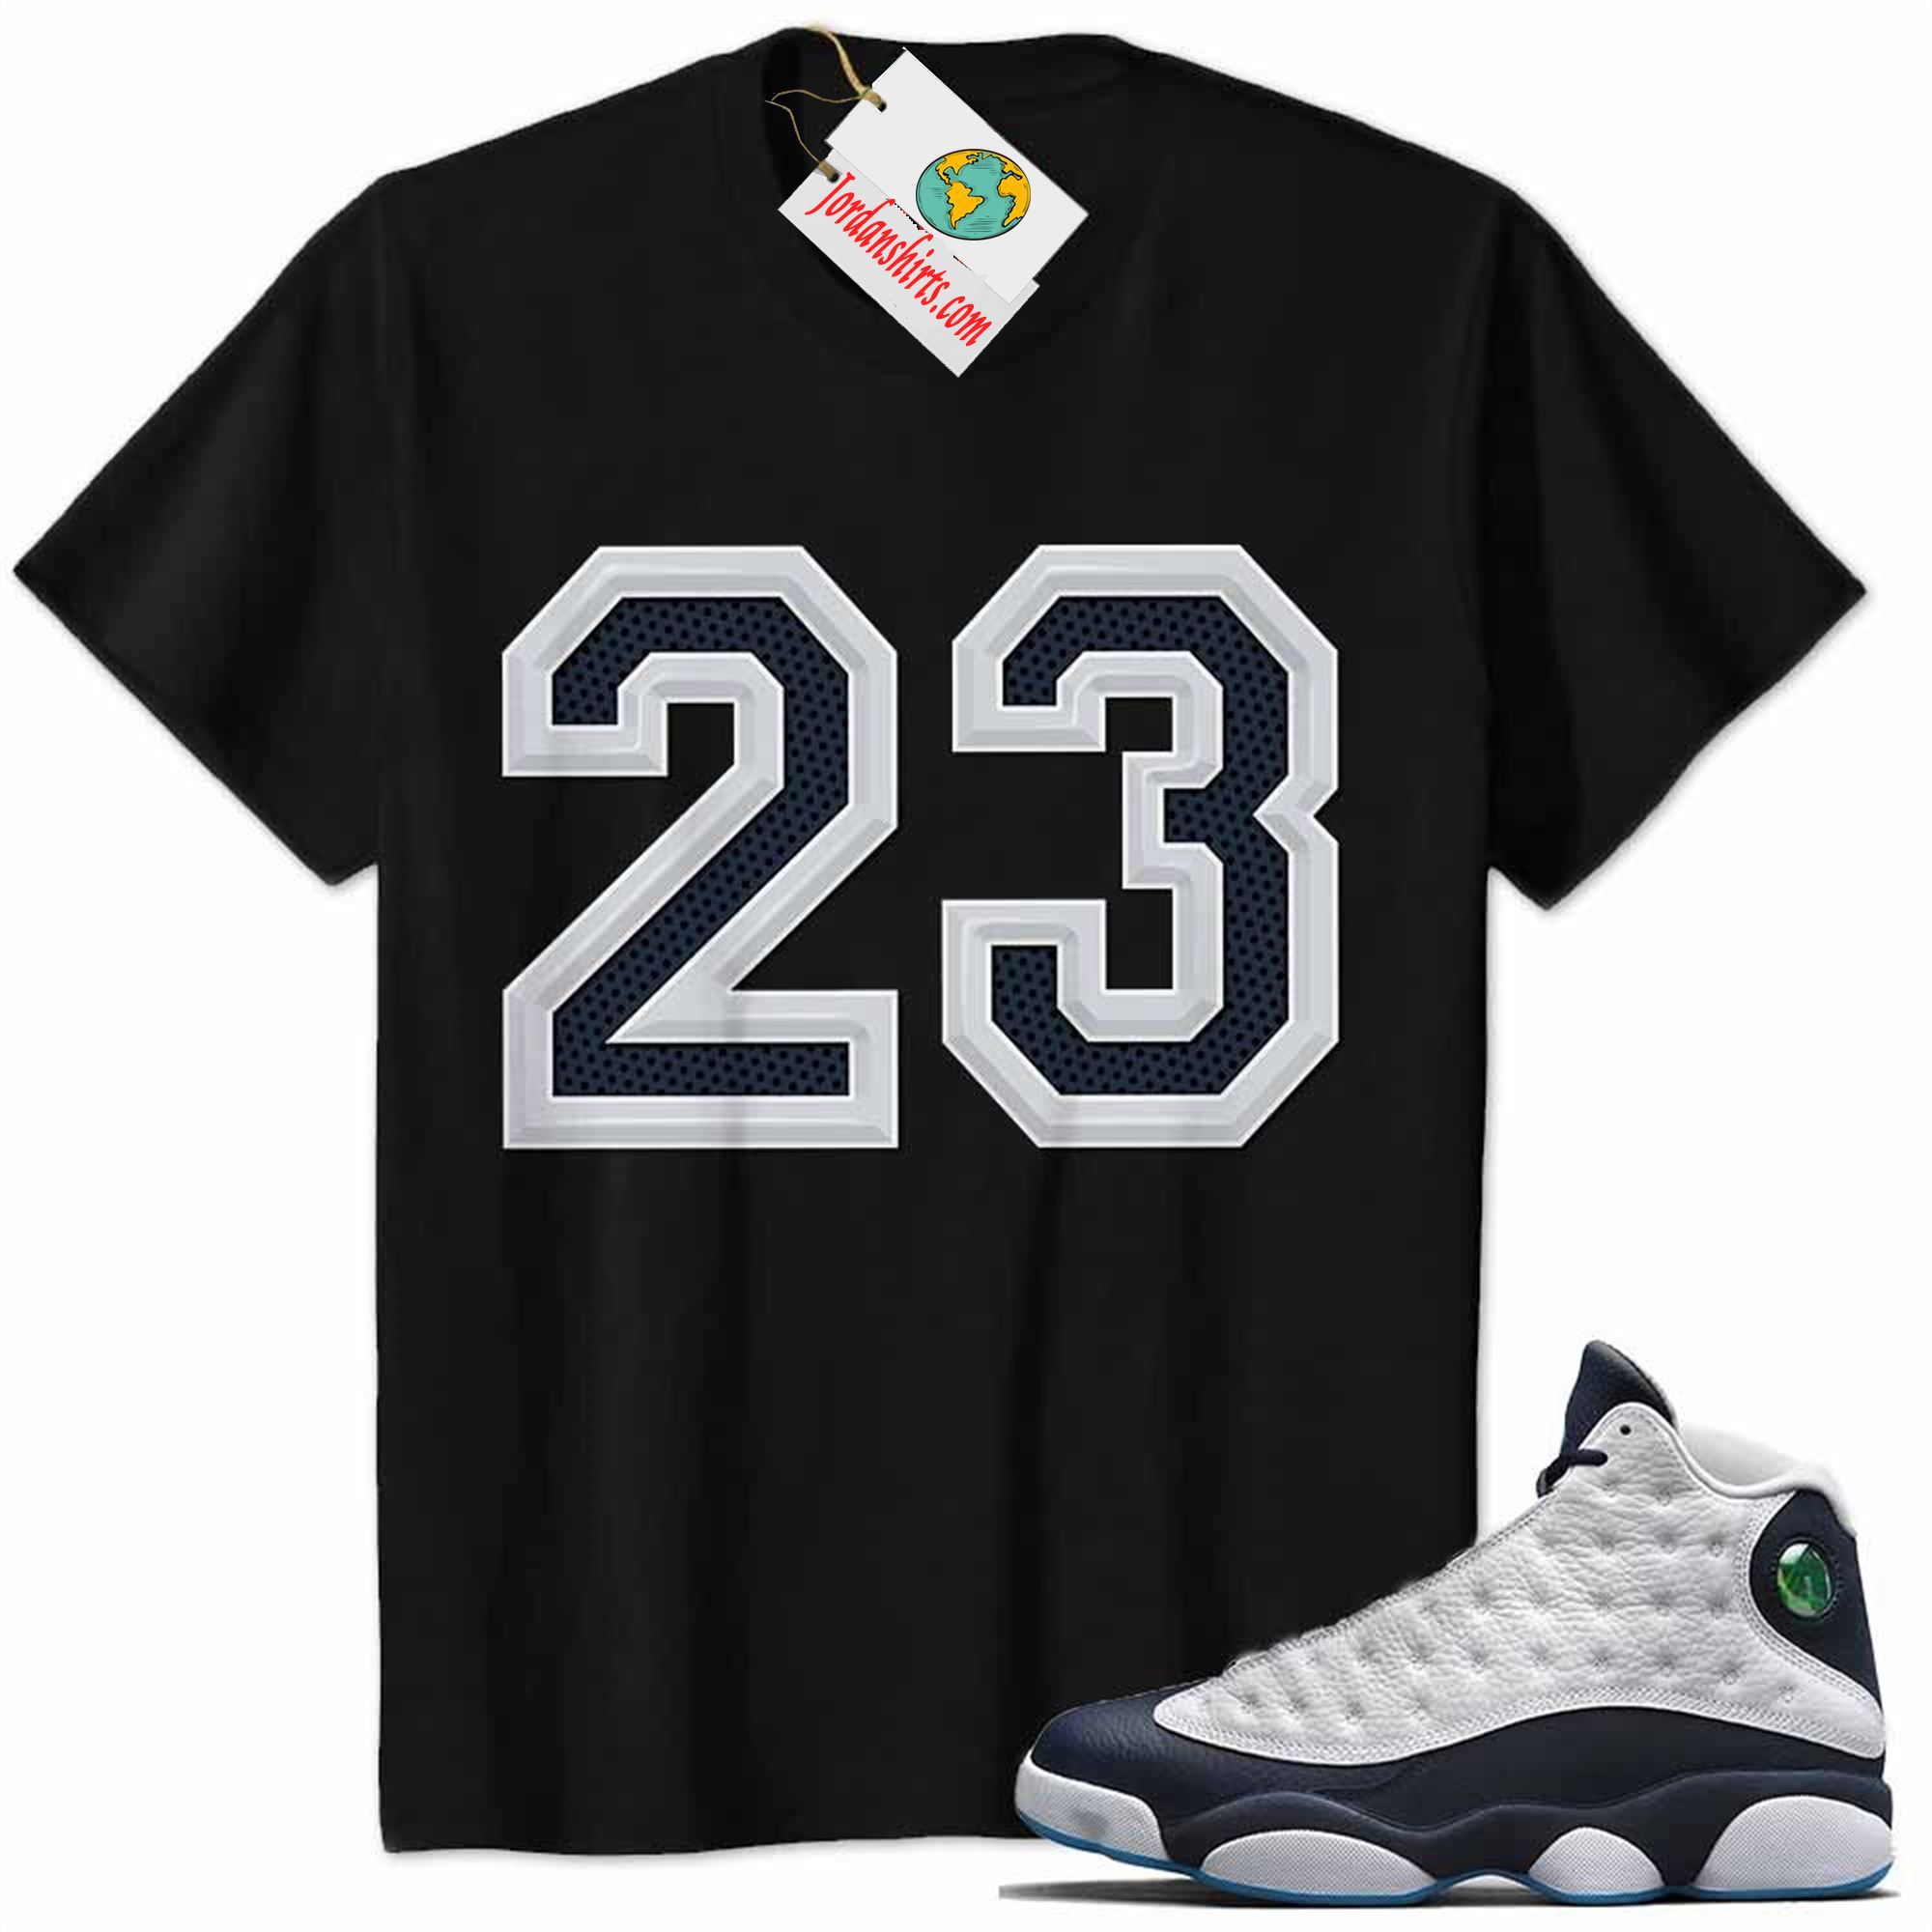 Jordan 13 Shirt, Jordan 13 Obsidian Shirt Michael Jordan Number 23 Black Full Size Up To 5xl